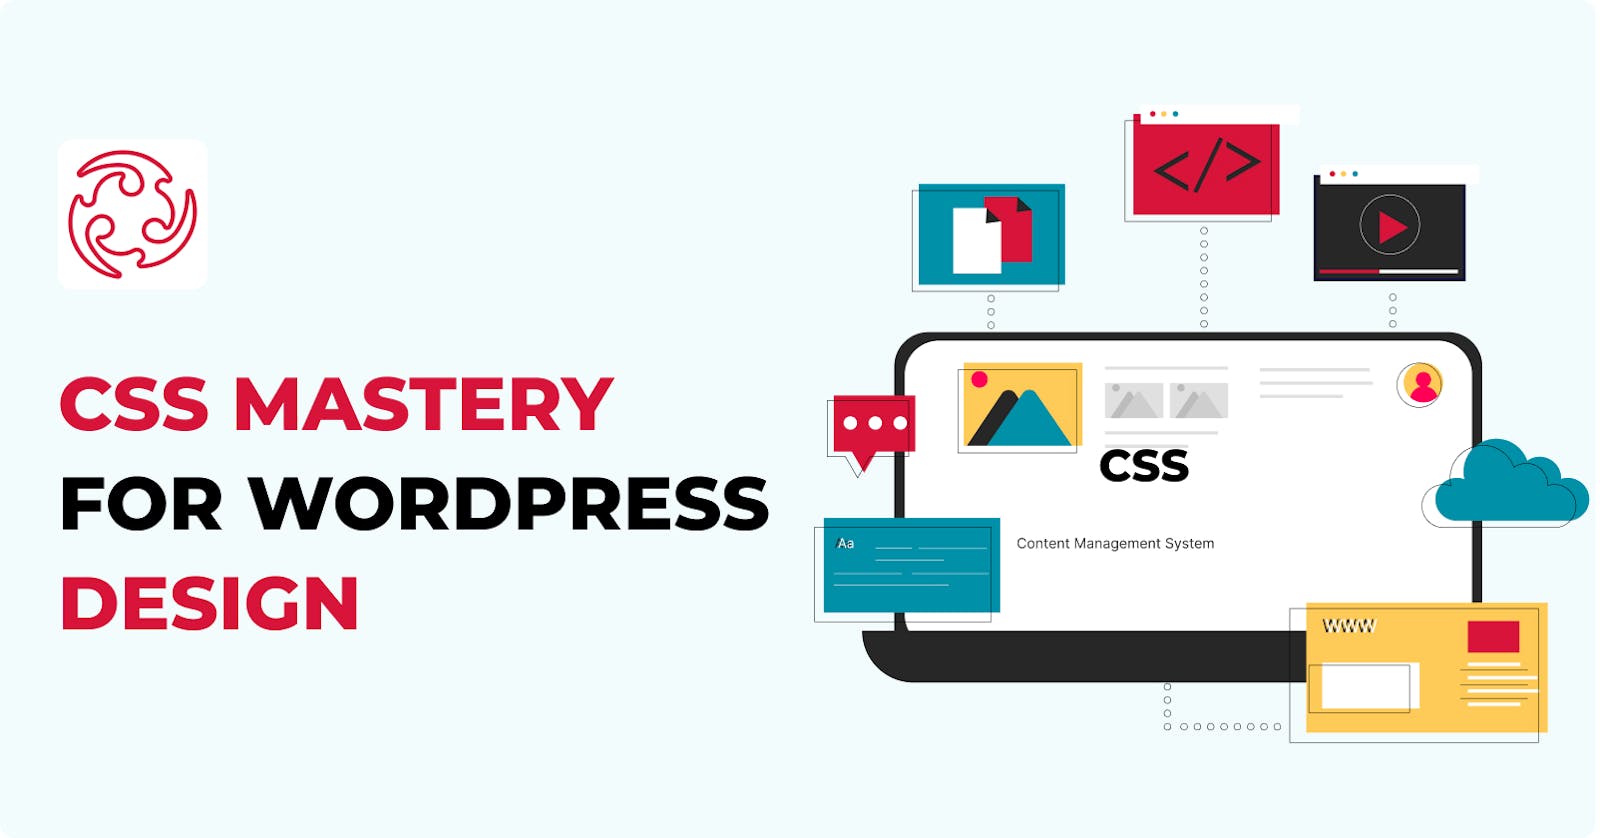 CSS Mastery for WordPress Design